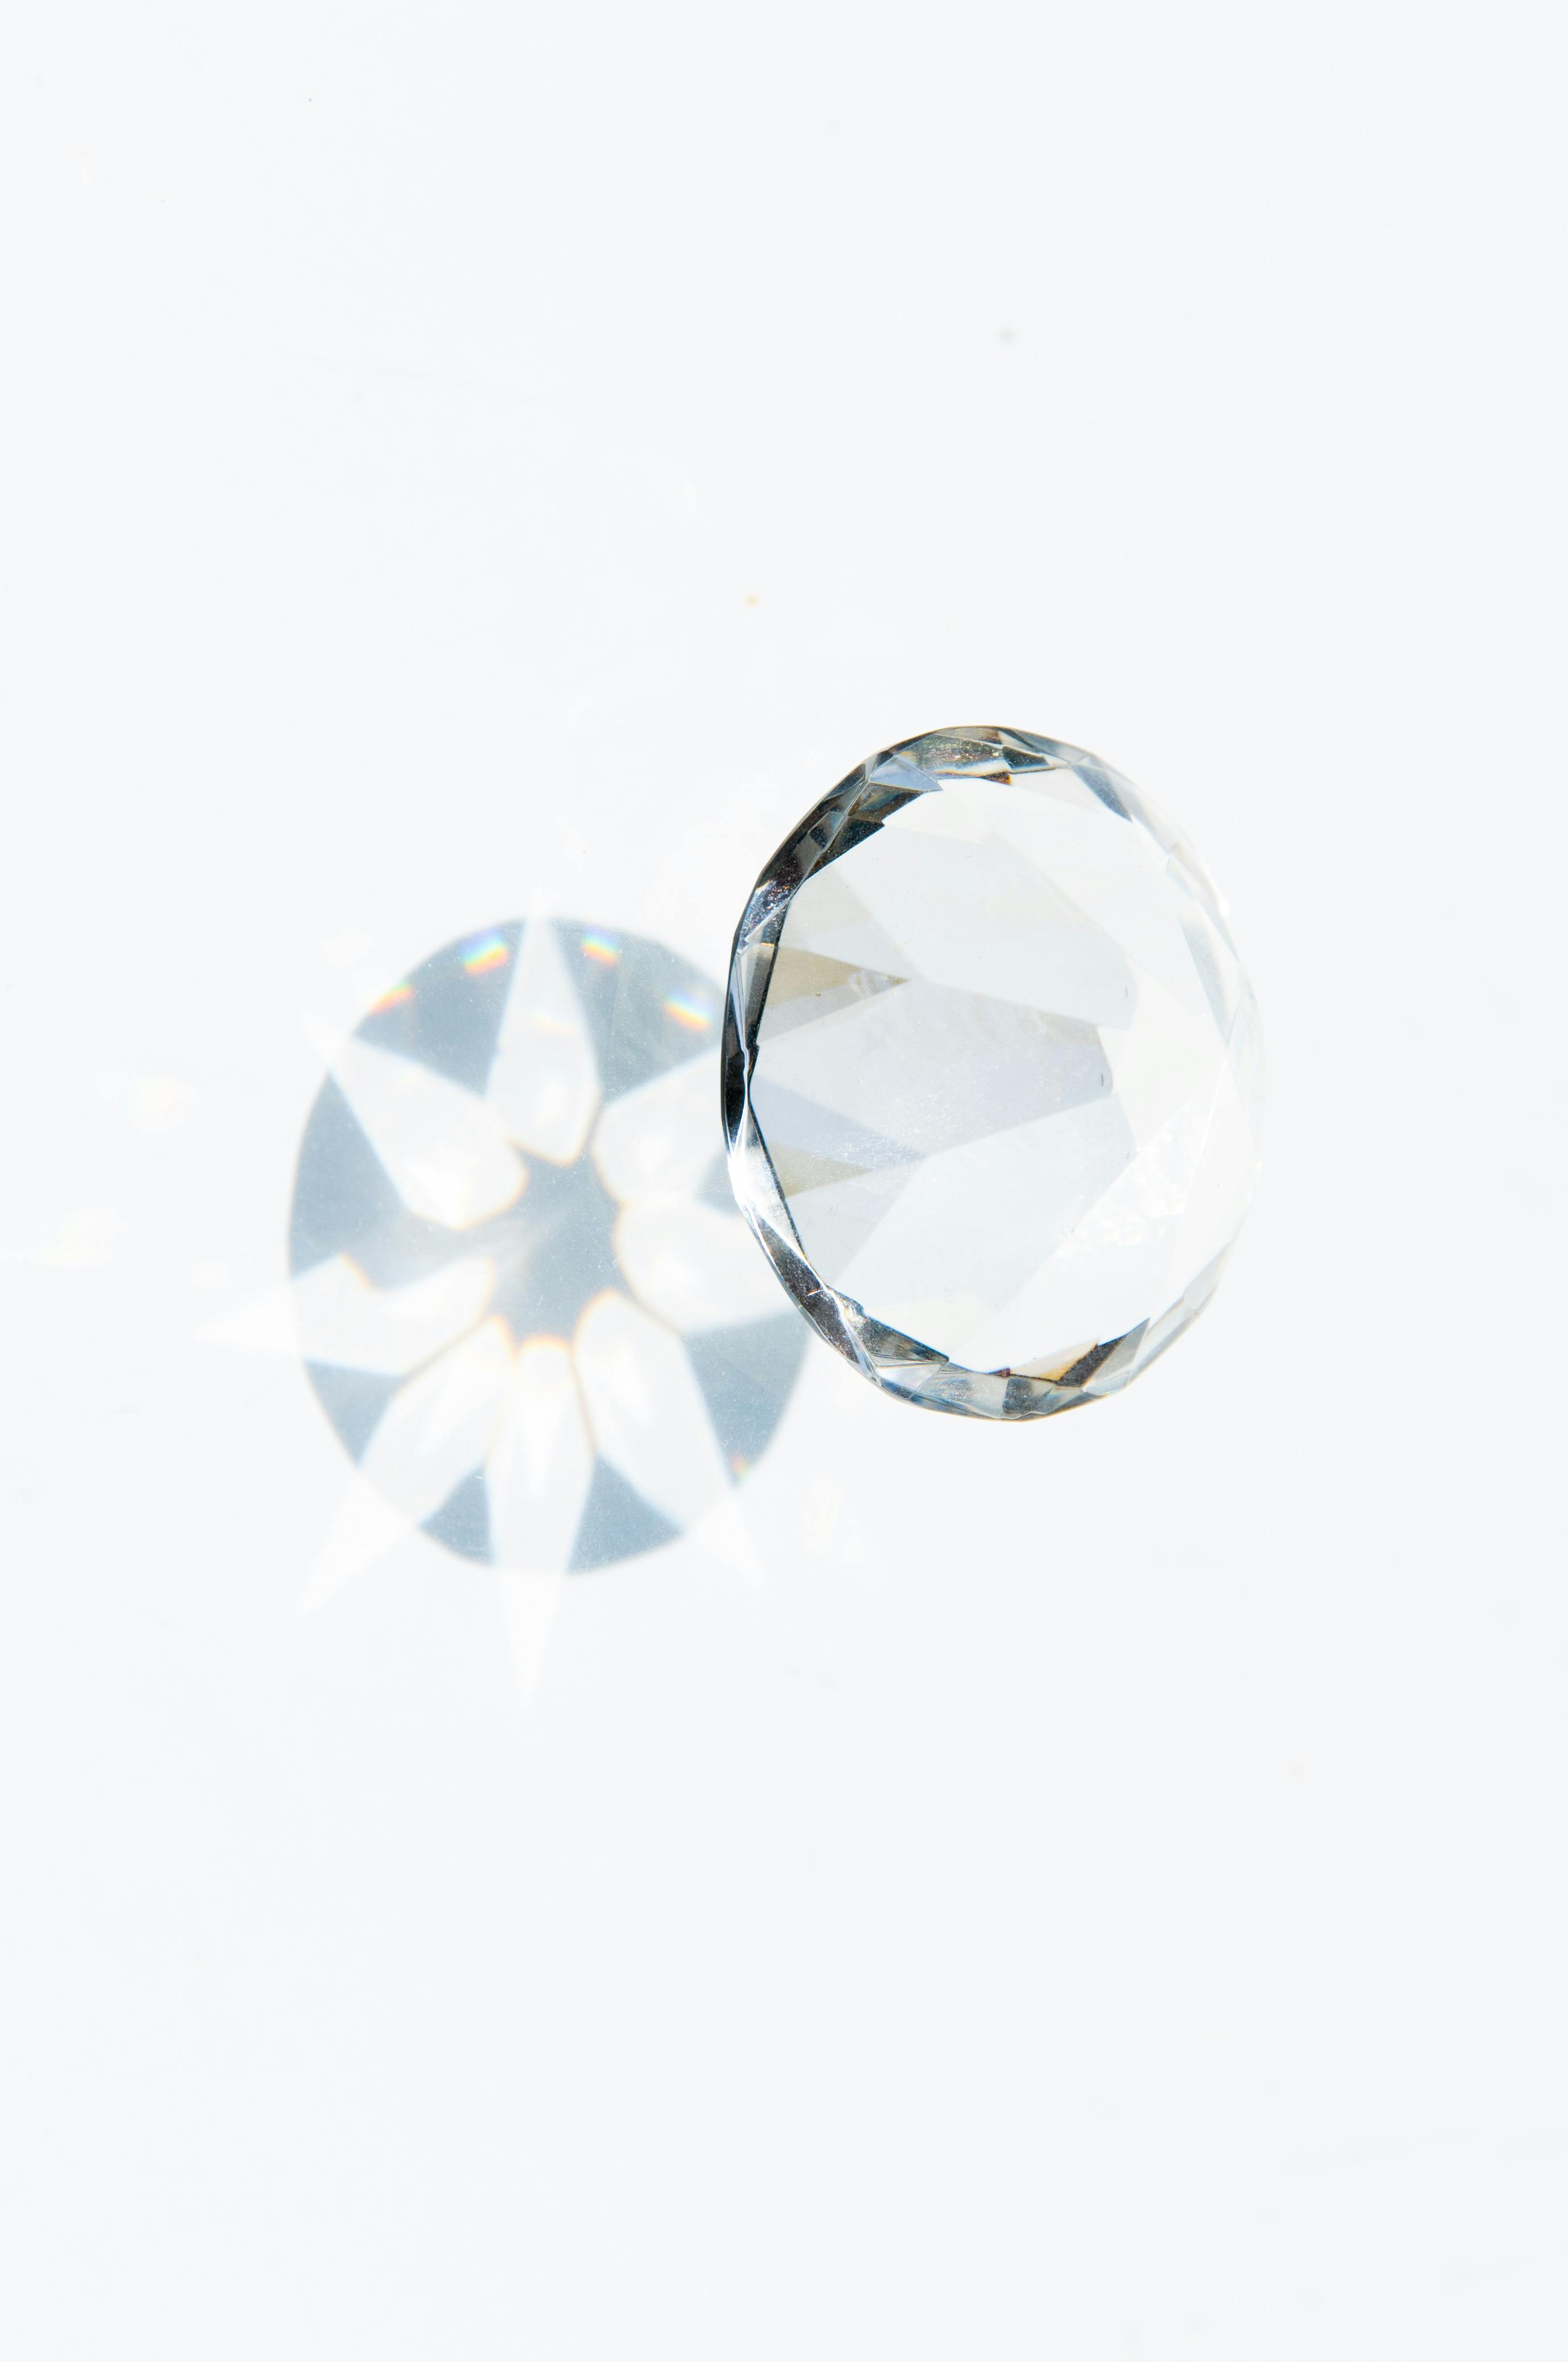 diamond on white surface